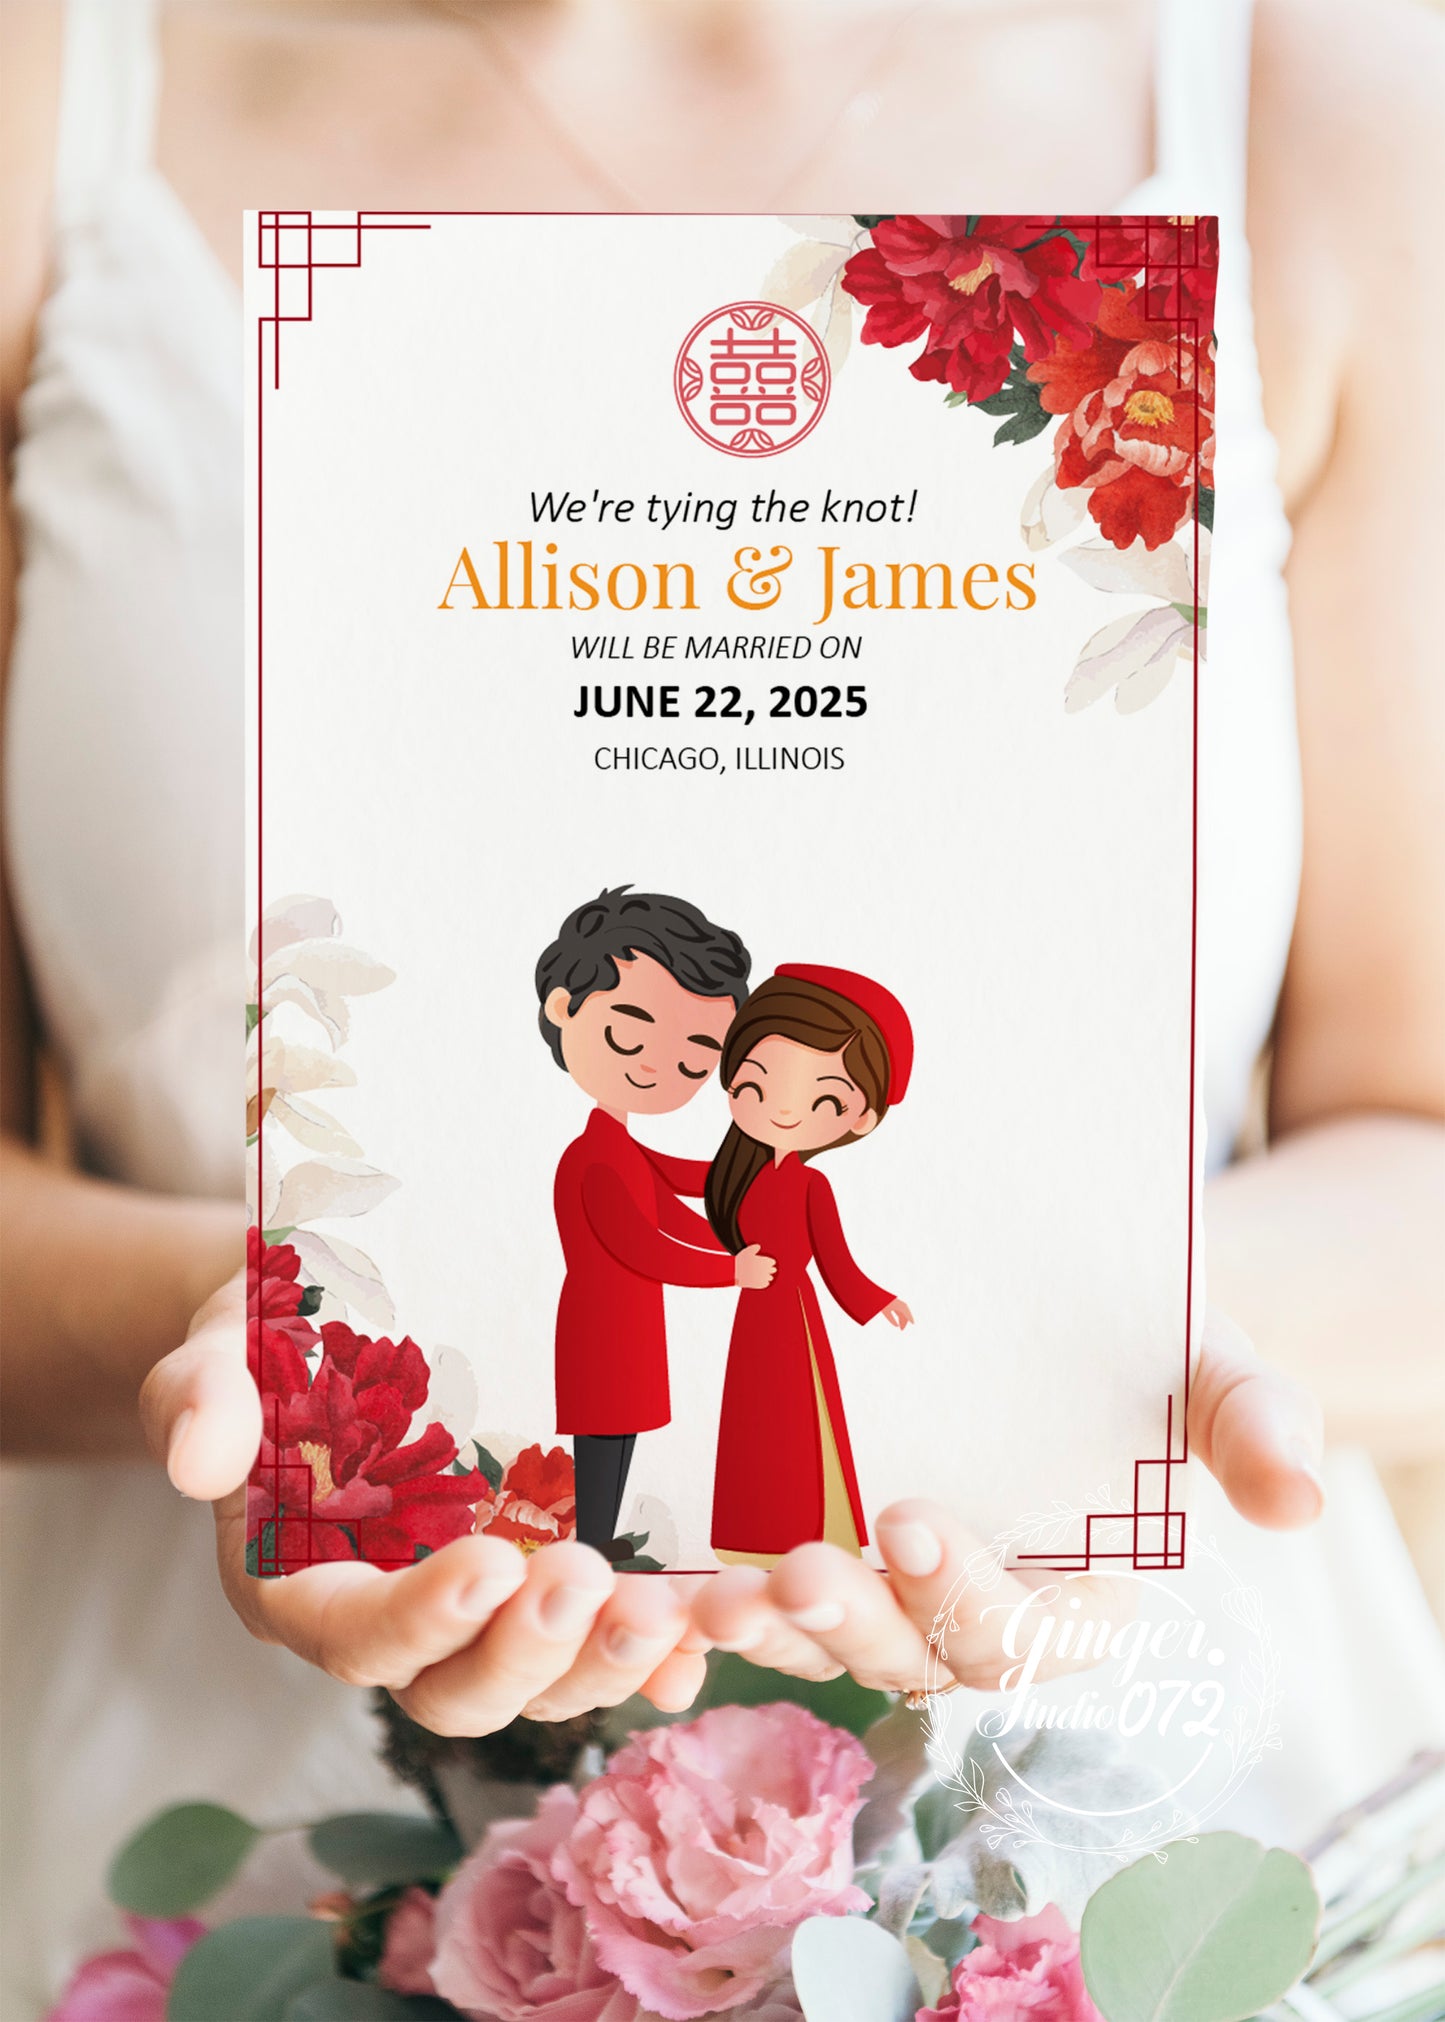 Cute Vietnamese wedding invite, Áo dài theme, Customize Invite Template #vmwd210102